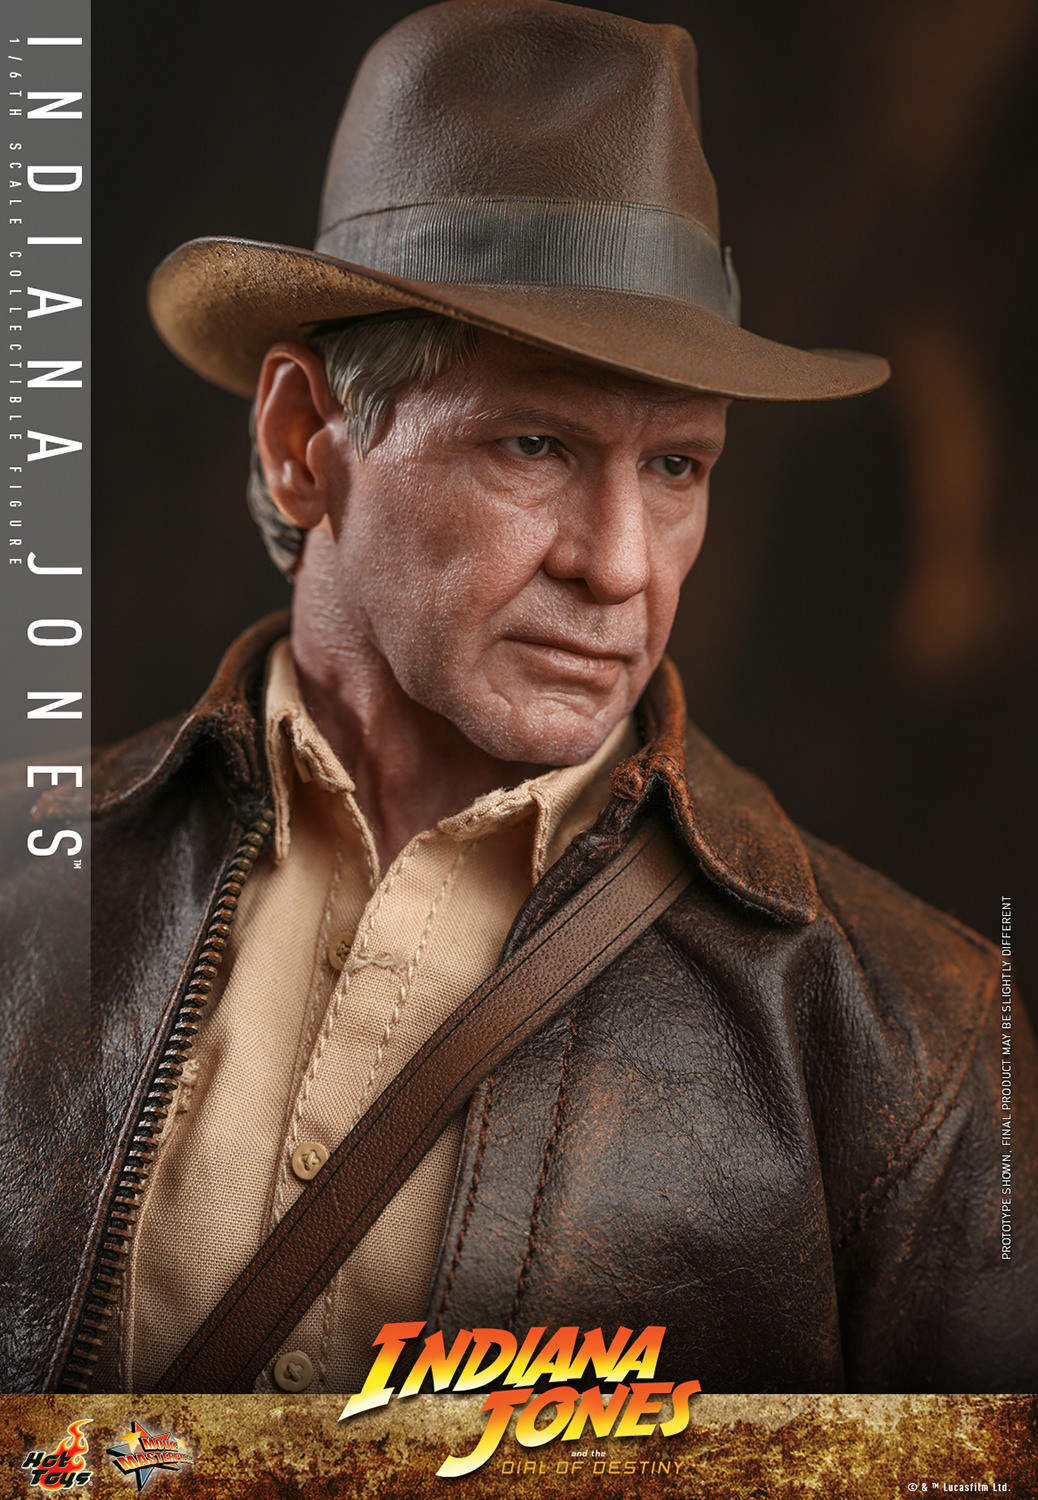 Indiana Jones Collector Edition (Prototype Shown) View 3